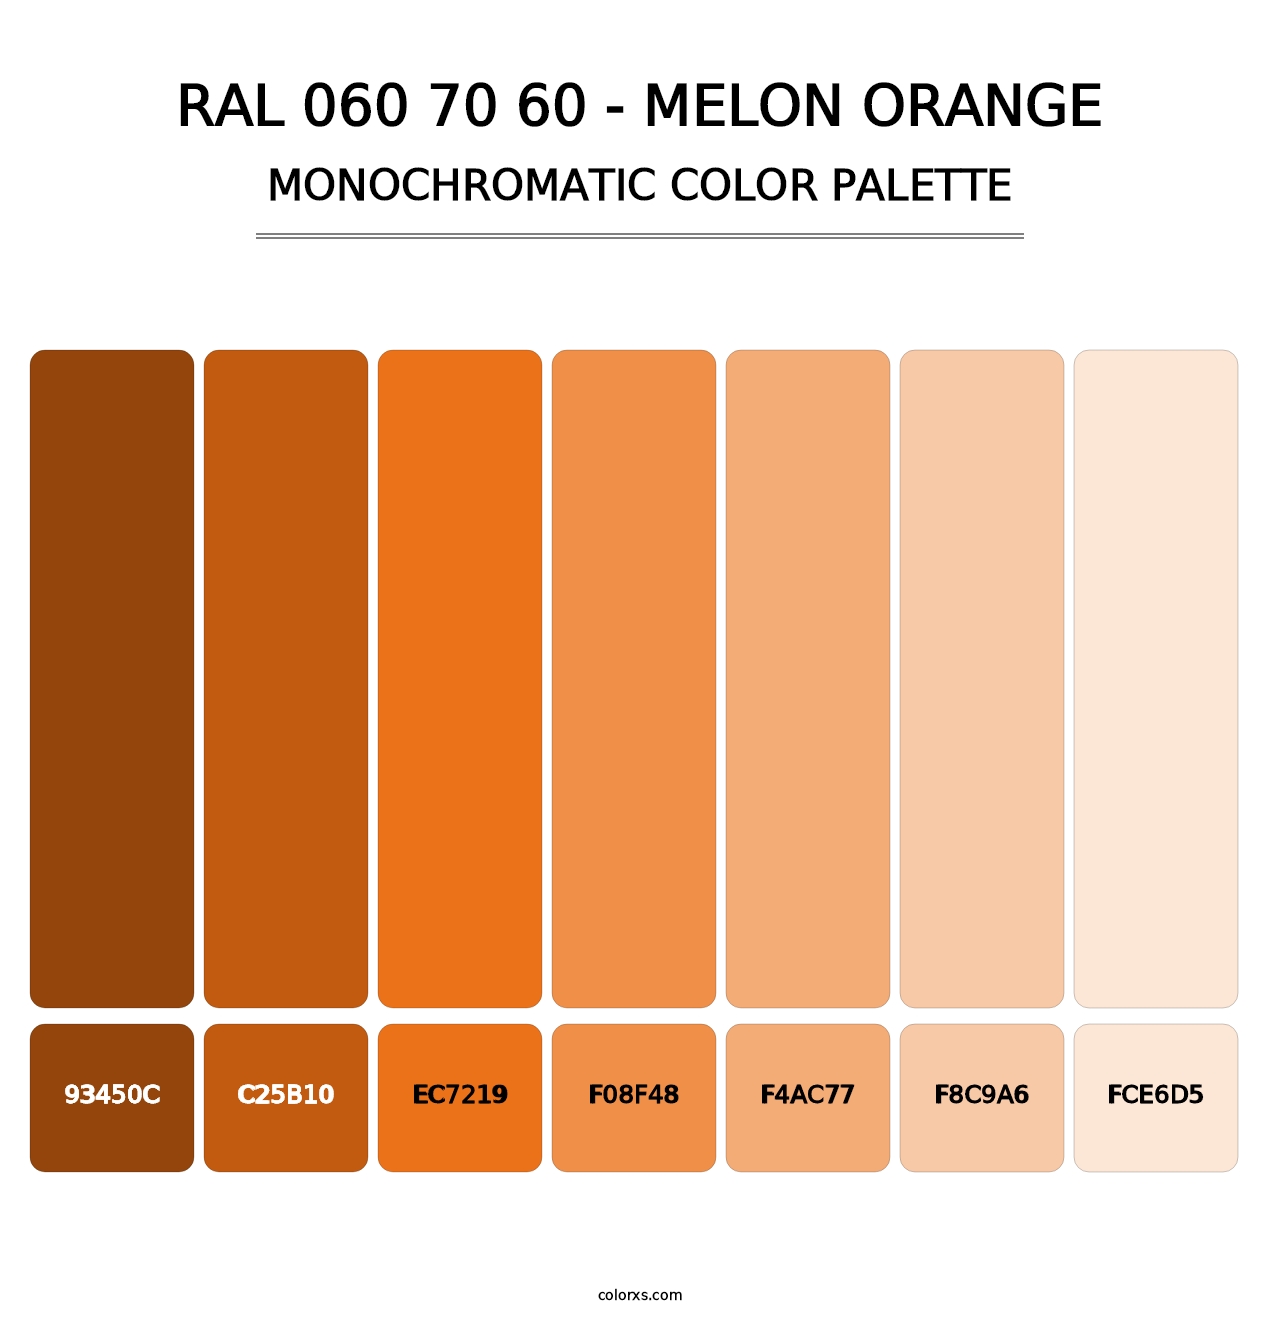 RAL 060 70 60 - Melon Orange - Monochromatic Color Palette